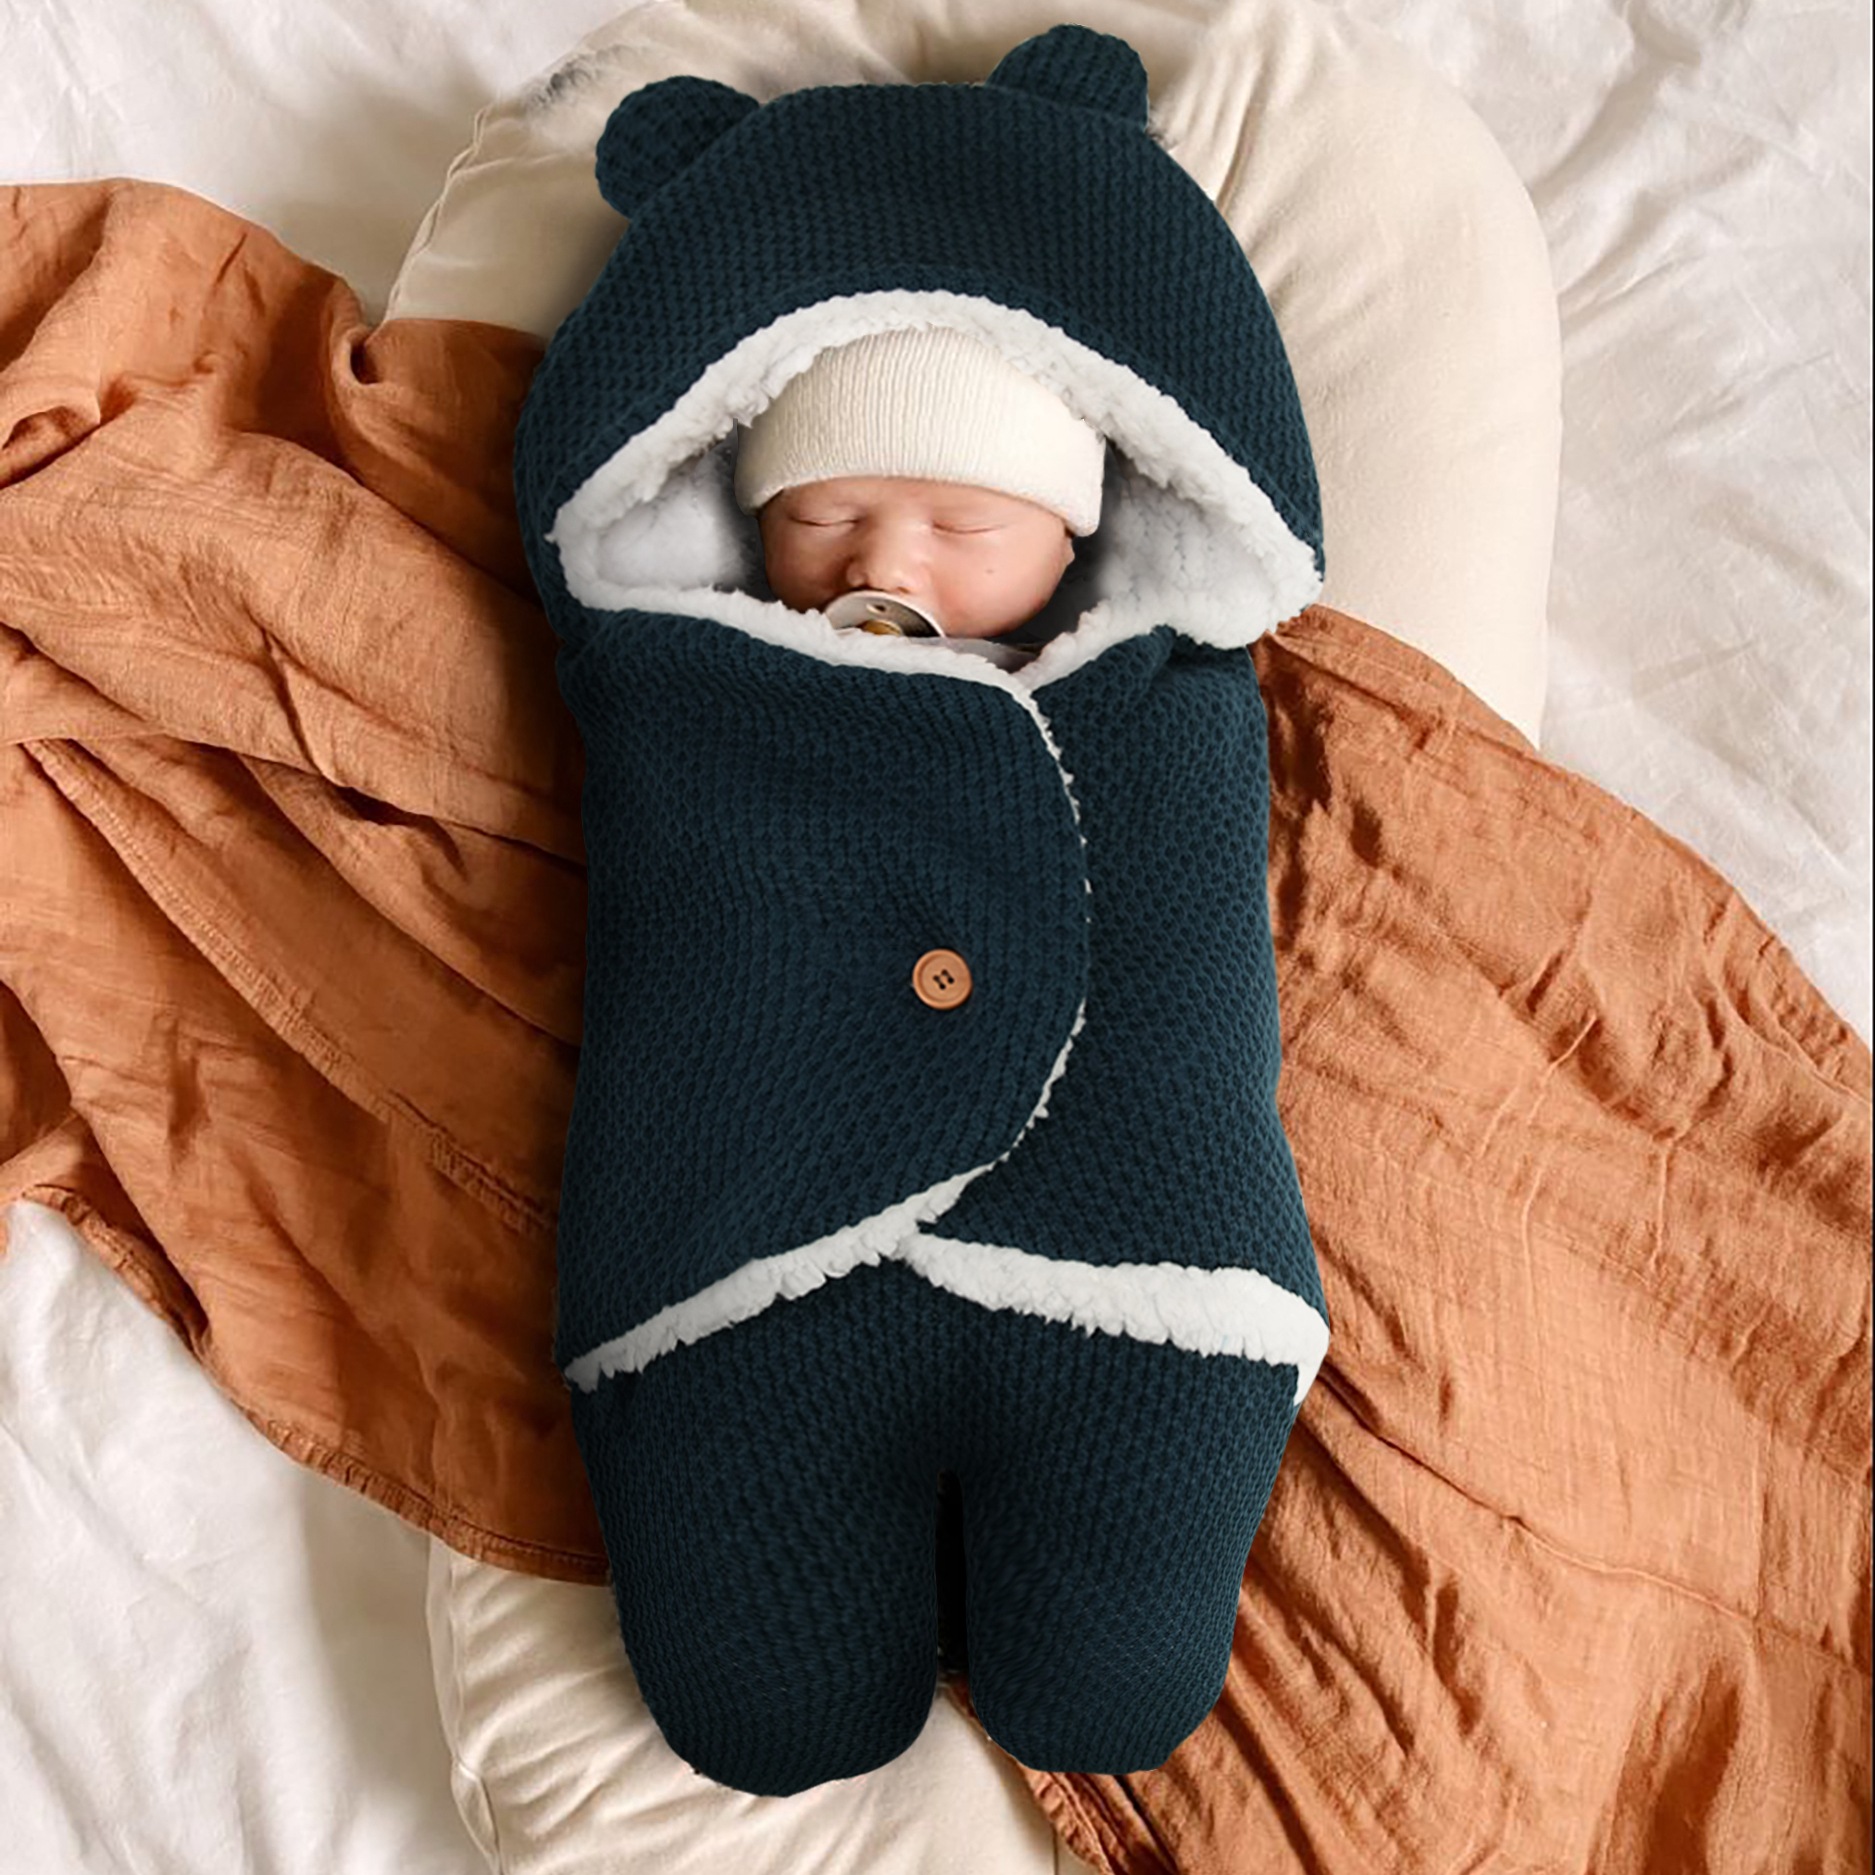 Envoltura Gruesa Para Bebé, Sobre De Punto, Saco De Dormir Para